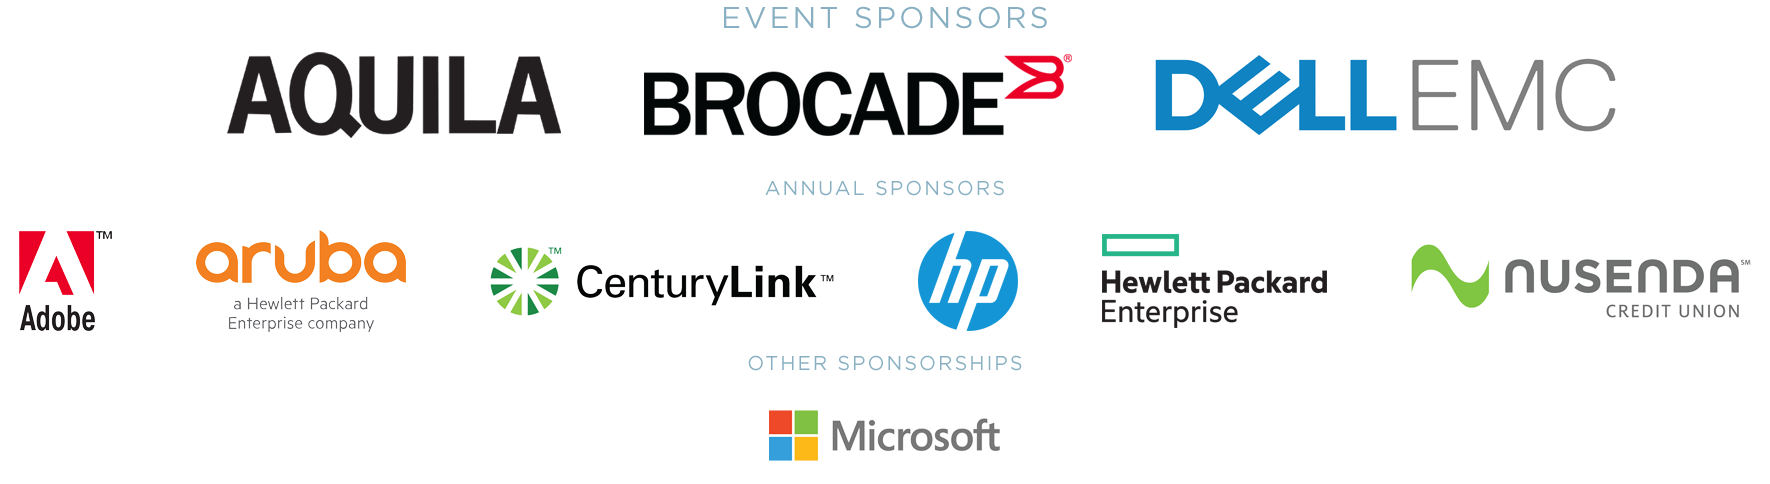 2017 Sponsors